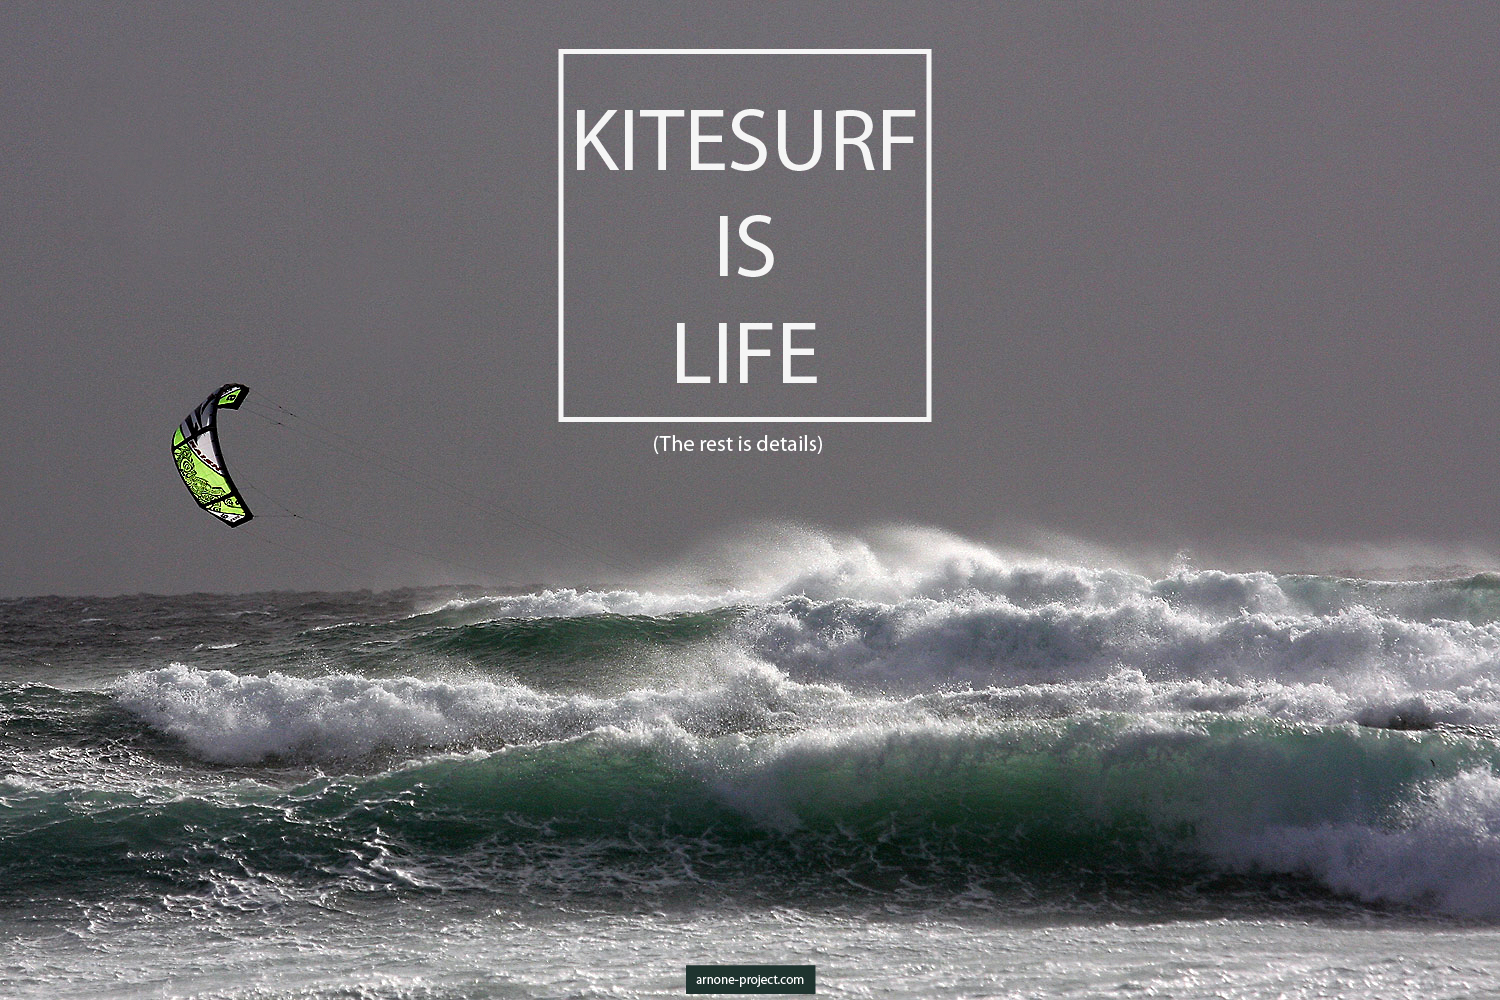 kitesurf-is-life-v2